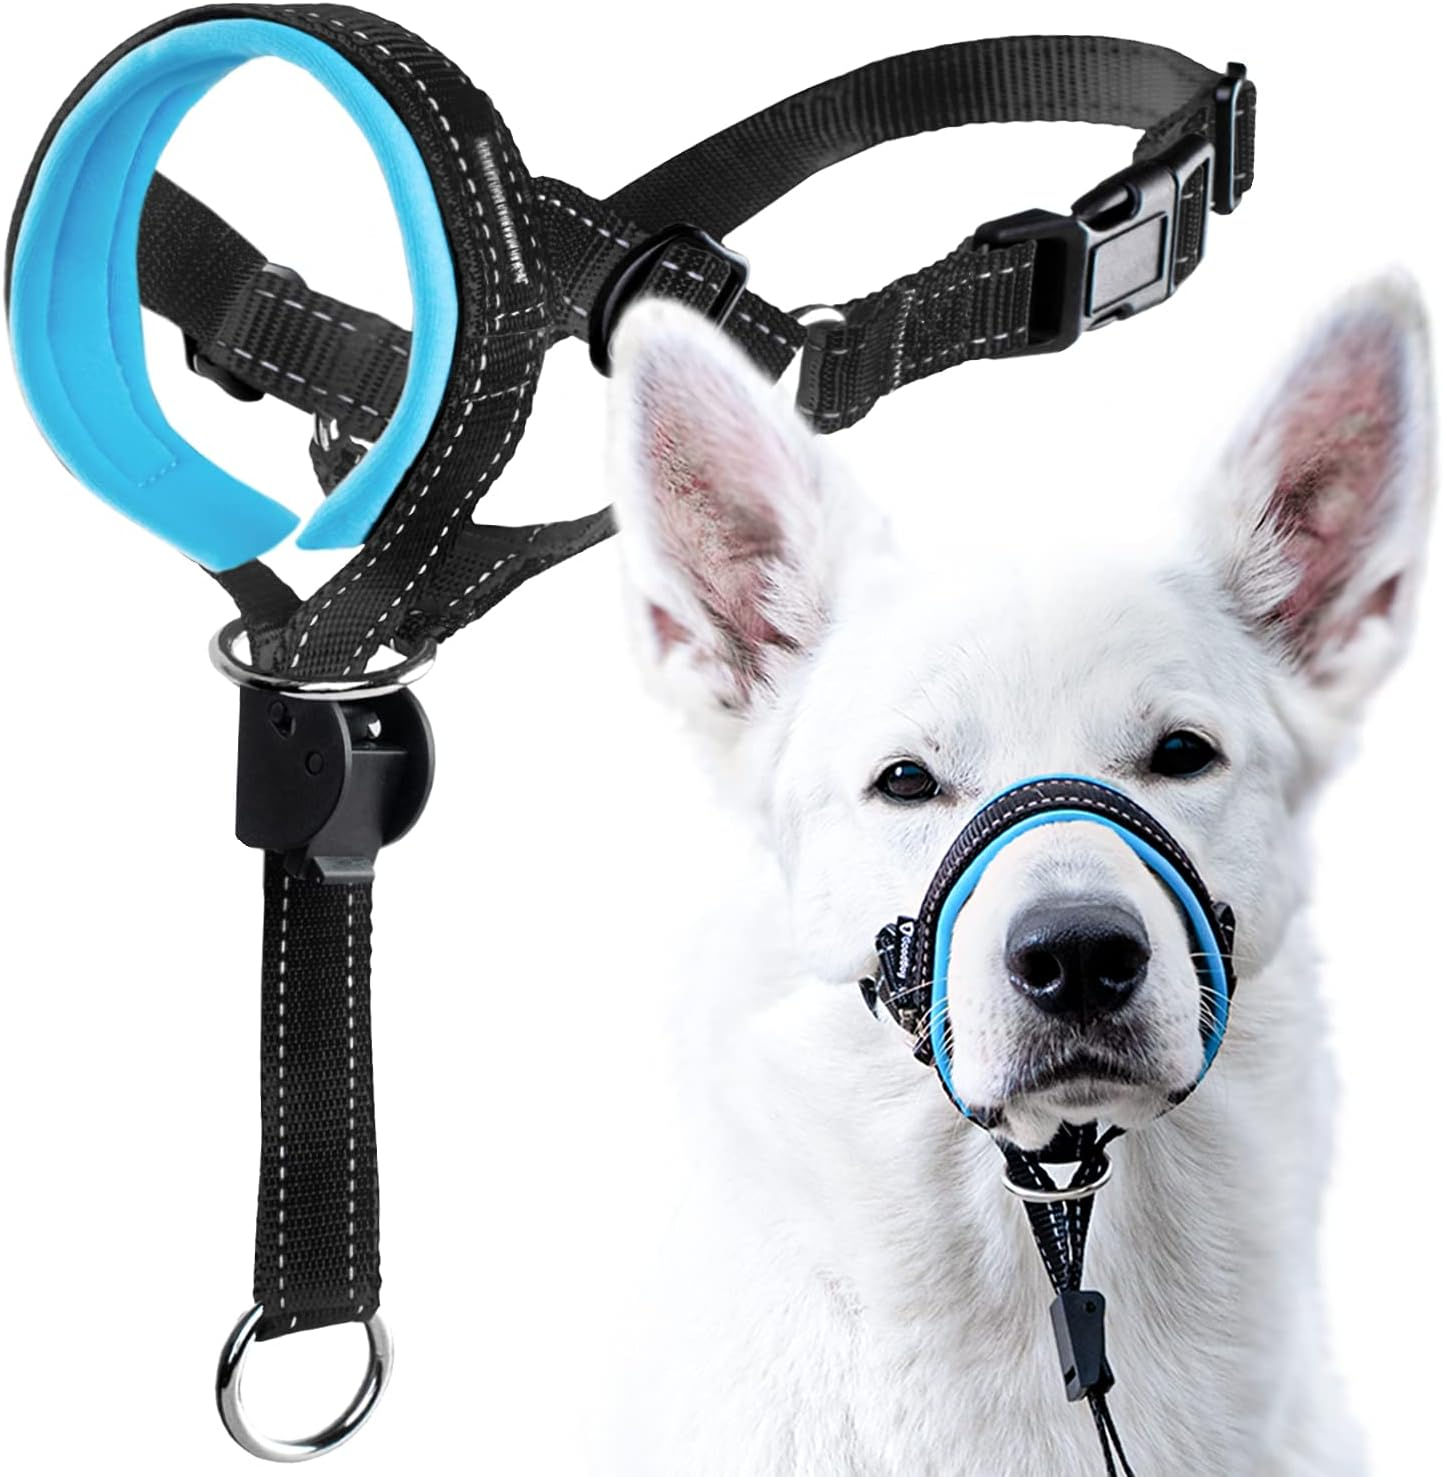 GoodBoy Dog Head Halter with Safety Strap